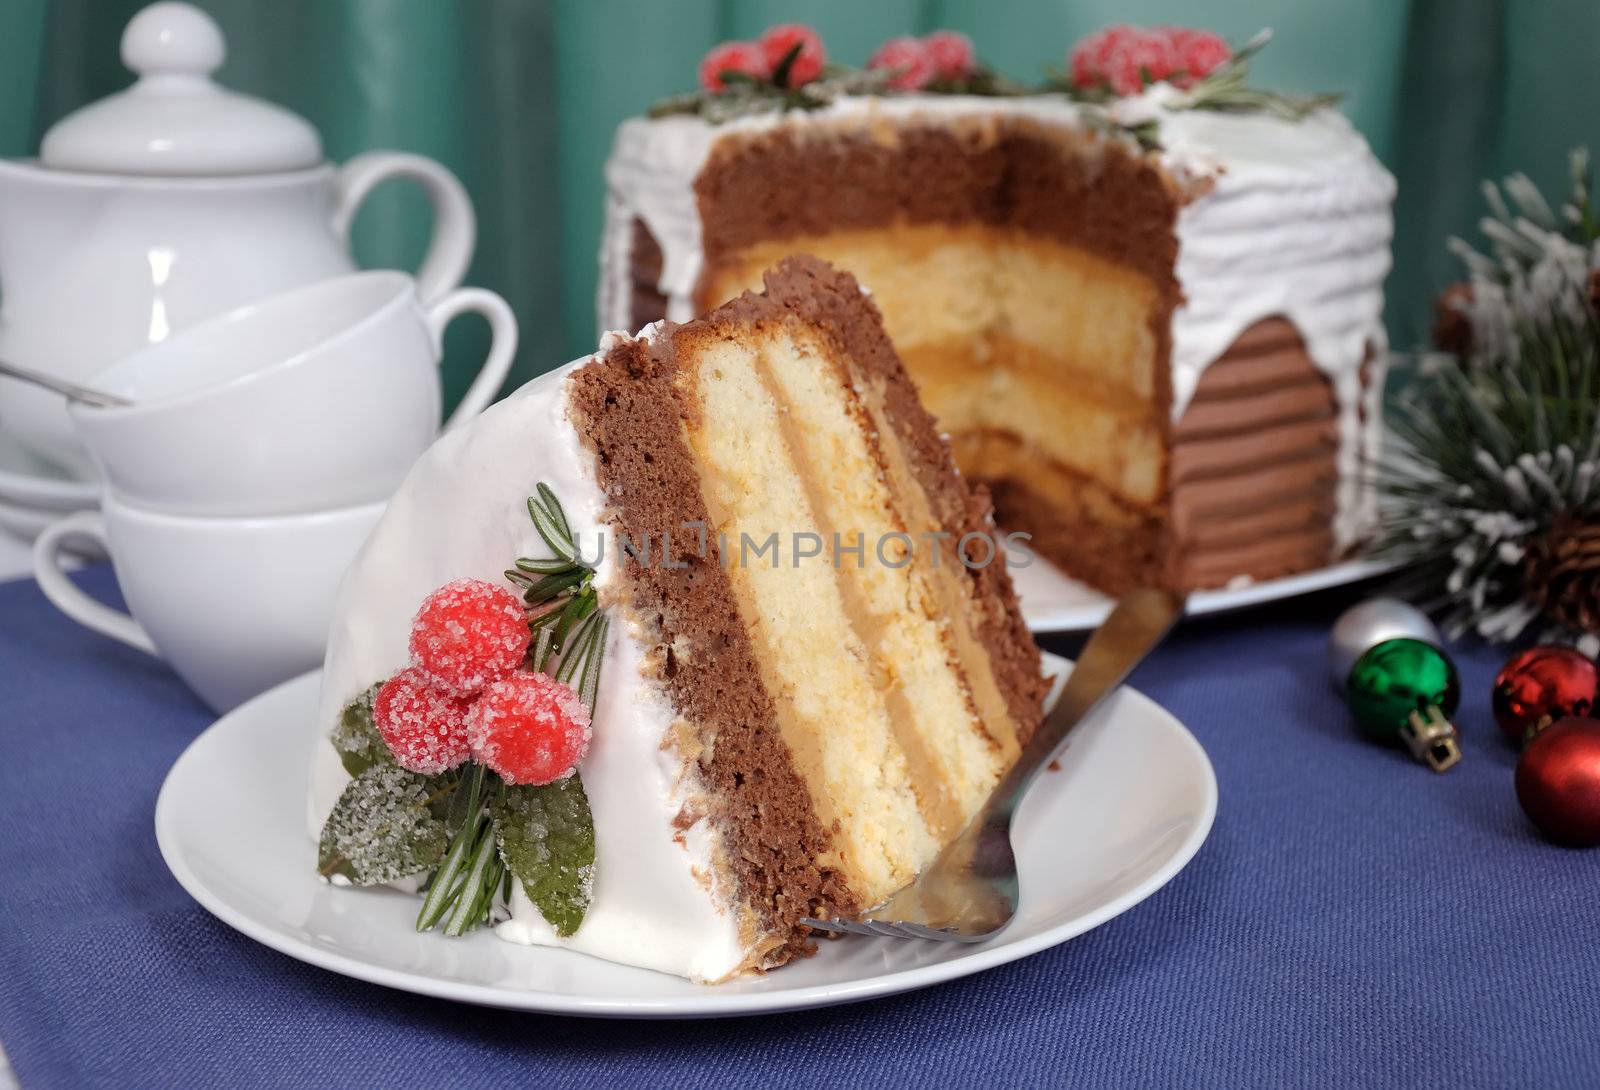 A piece of sponge cake layered with cream under a white glaze